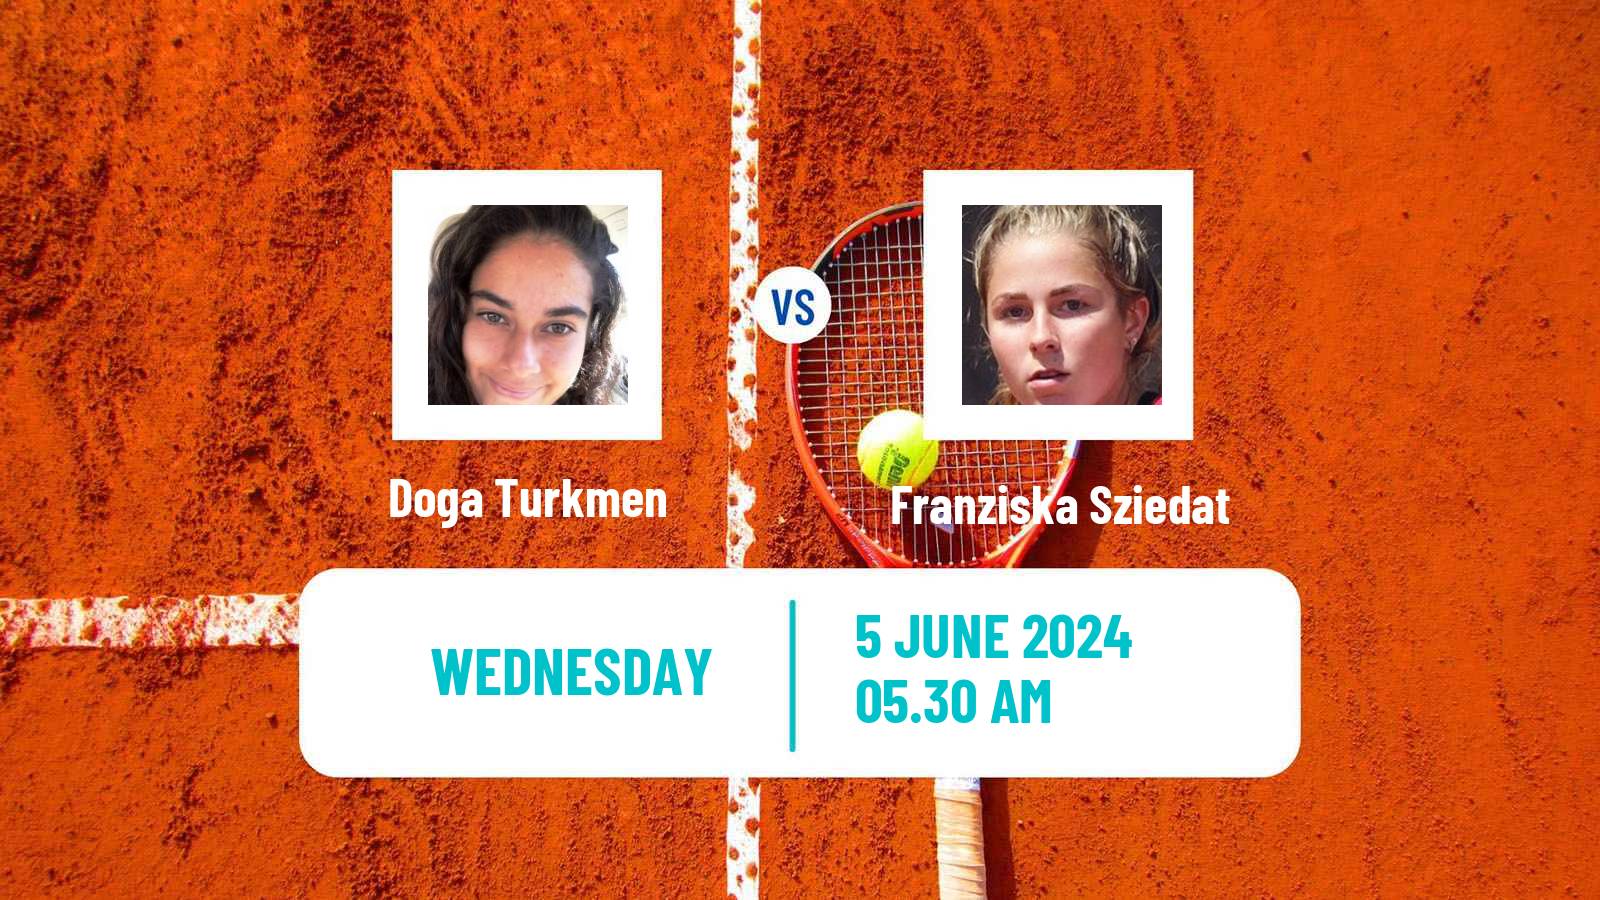 Tennis ITF W15 Banja Luka Women Doga Turkmen - Franziska Sziedat